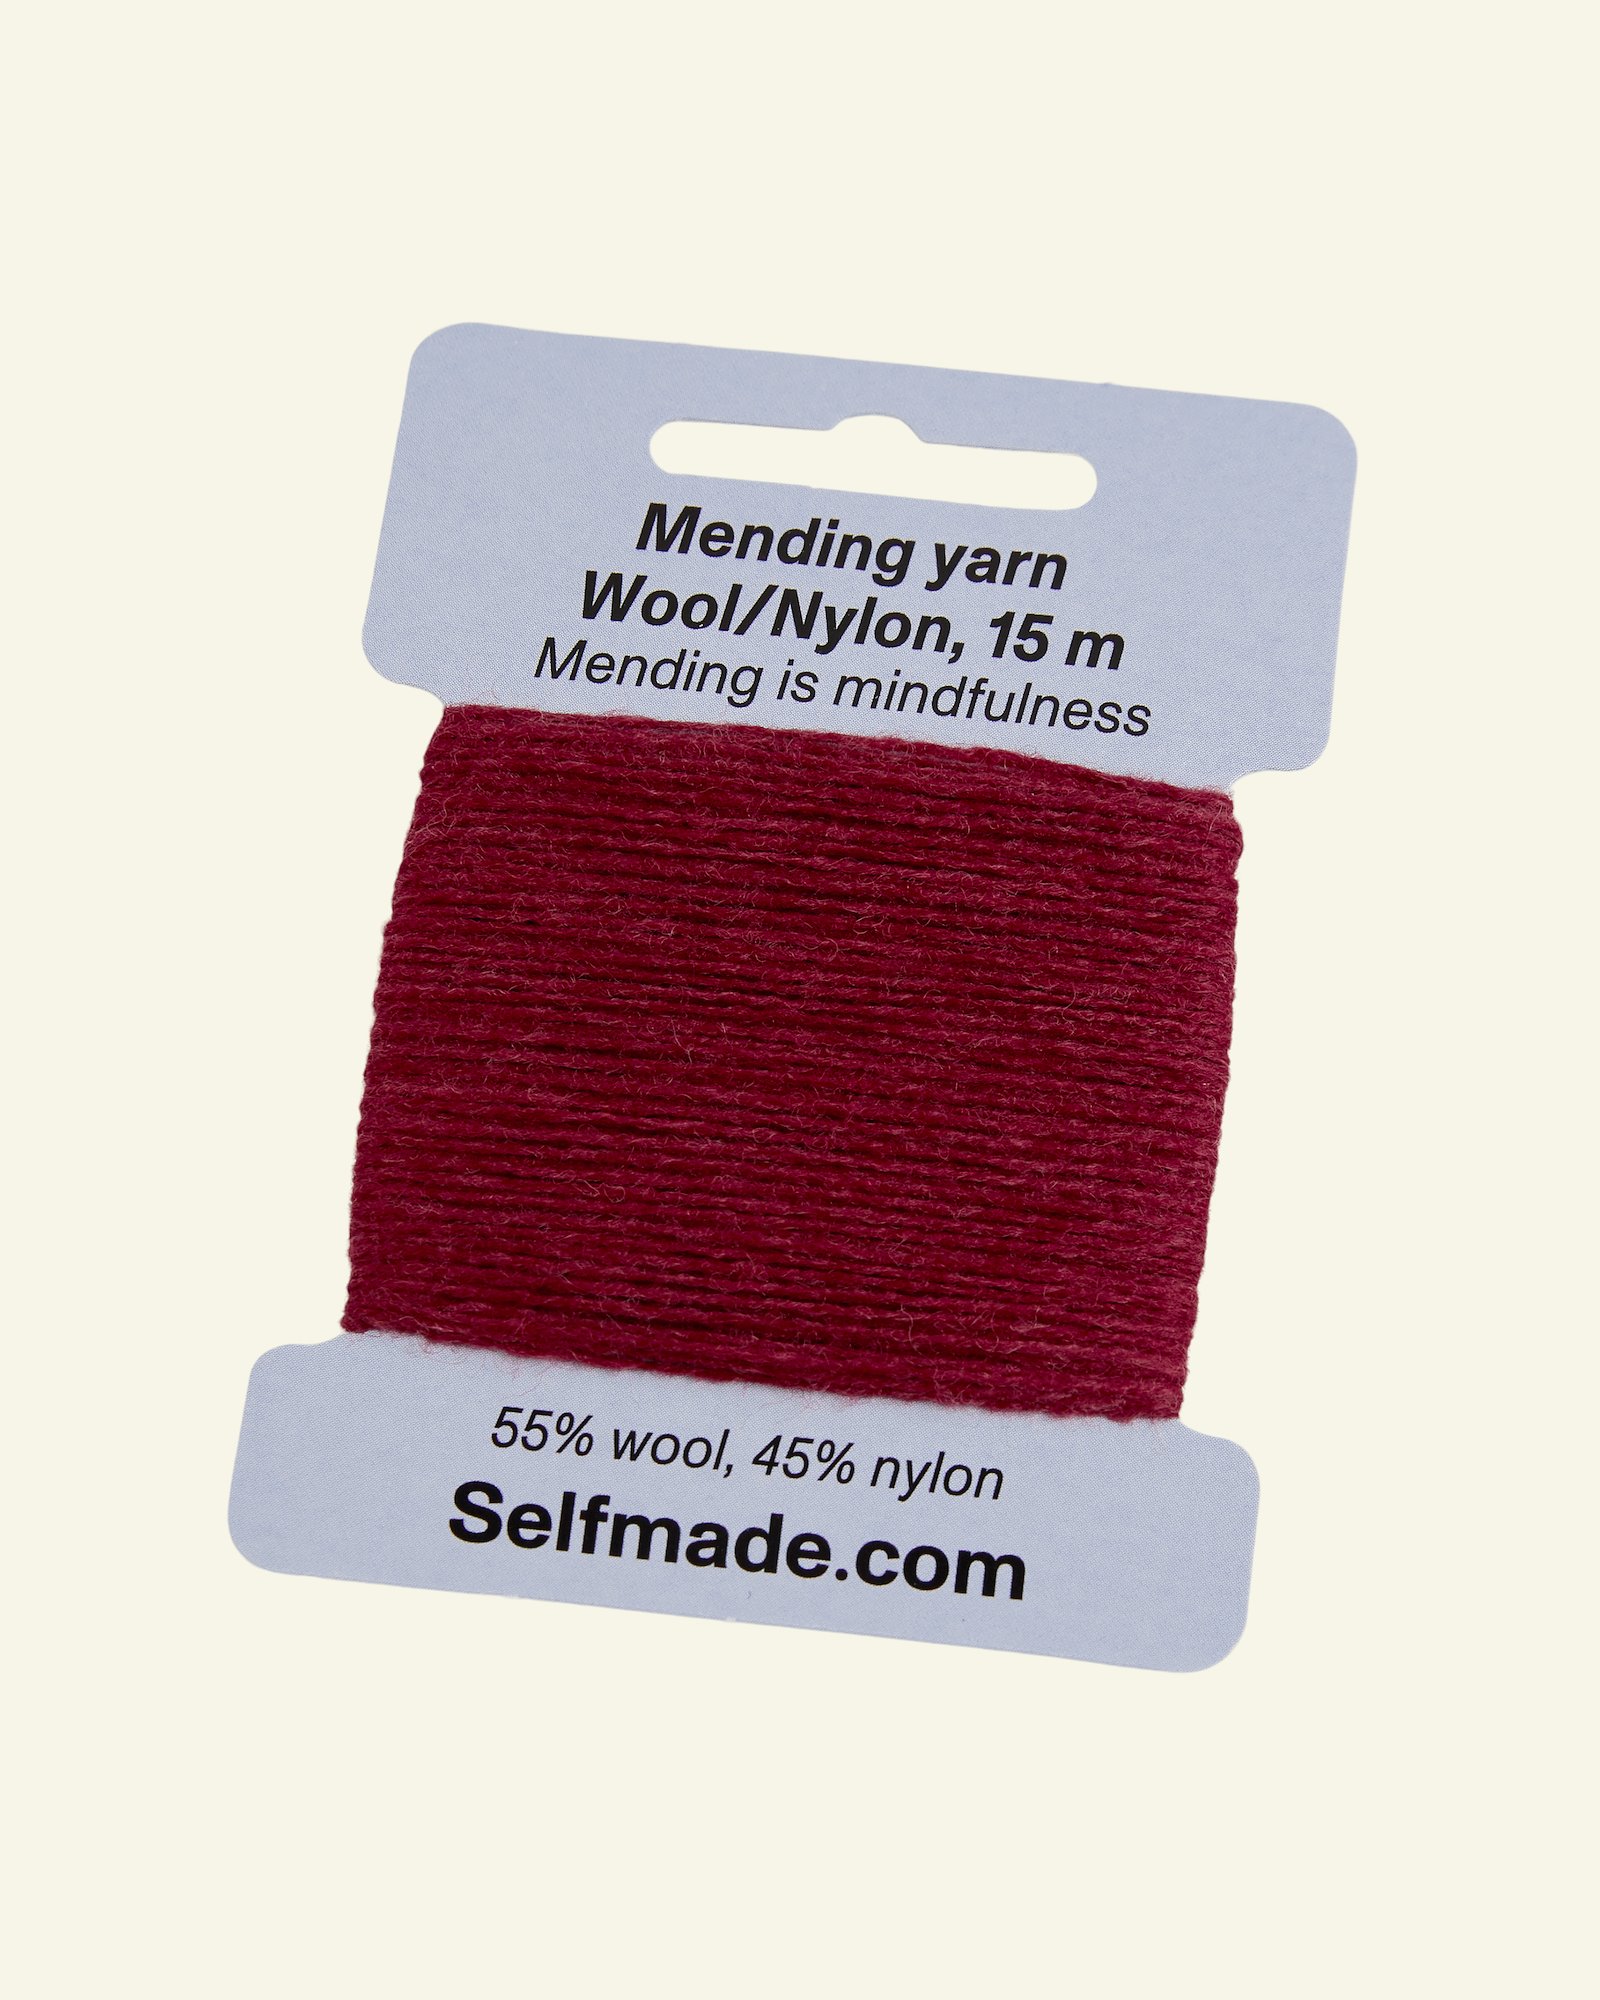 Mending yarn wool/nylon classic red 15m 35504_pack